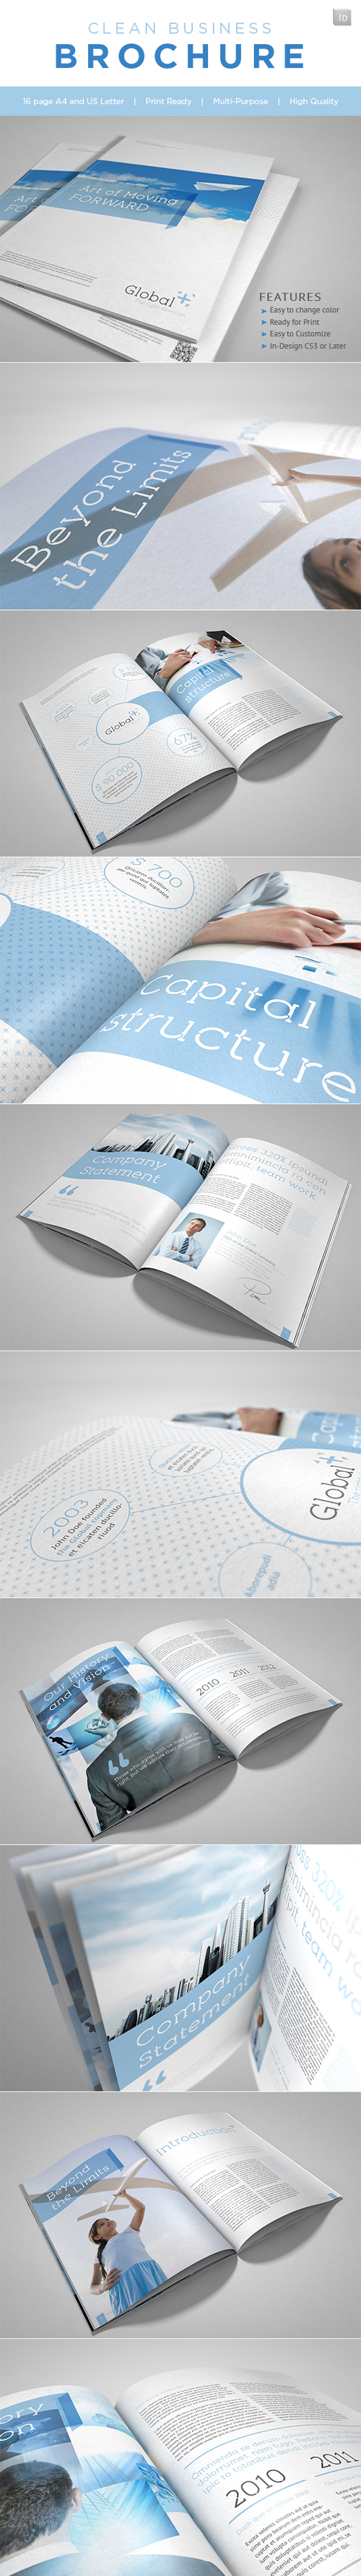 Clean Business Brochure